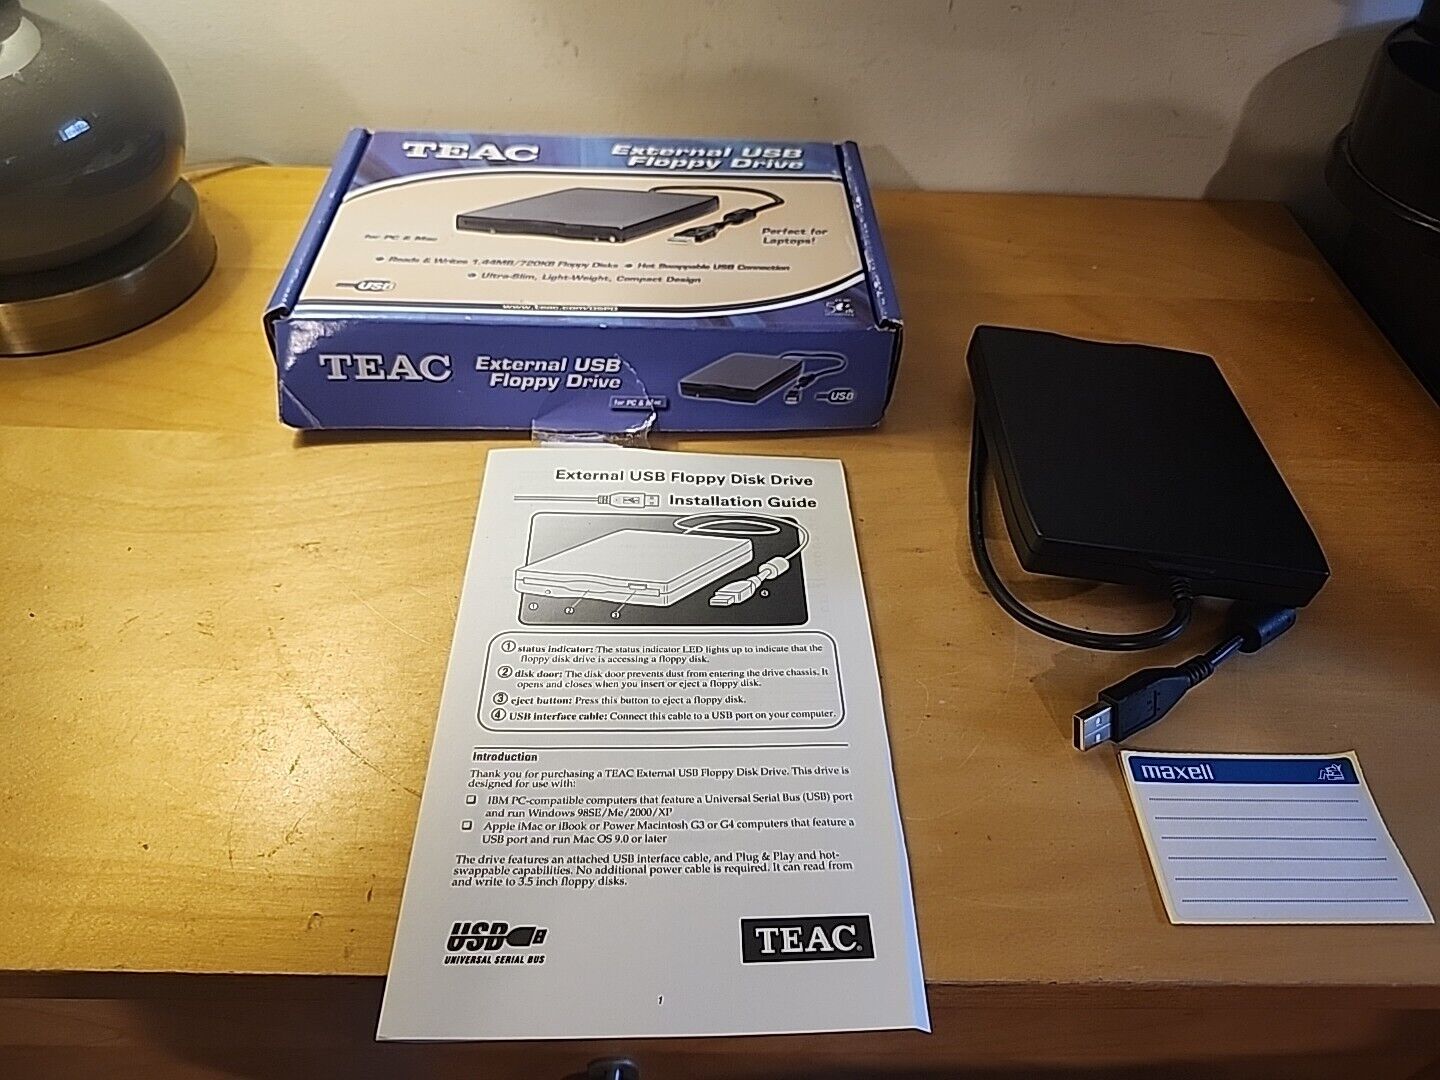 TEAC External USB Floppy Drive for Apple Macintosh Mac or PC Computers